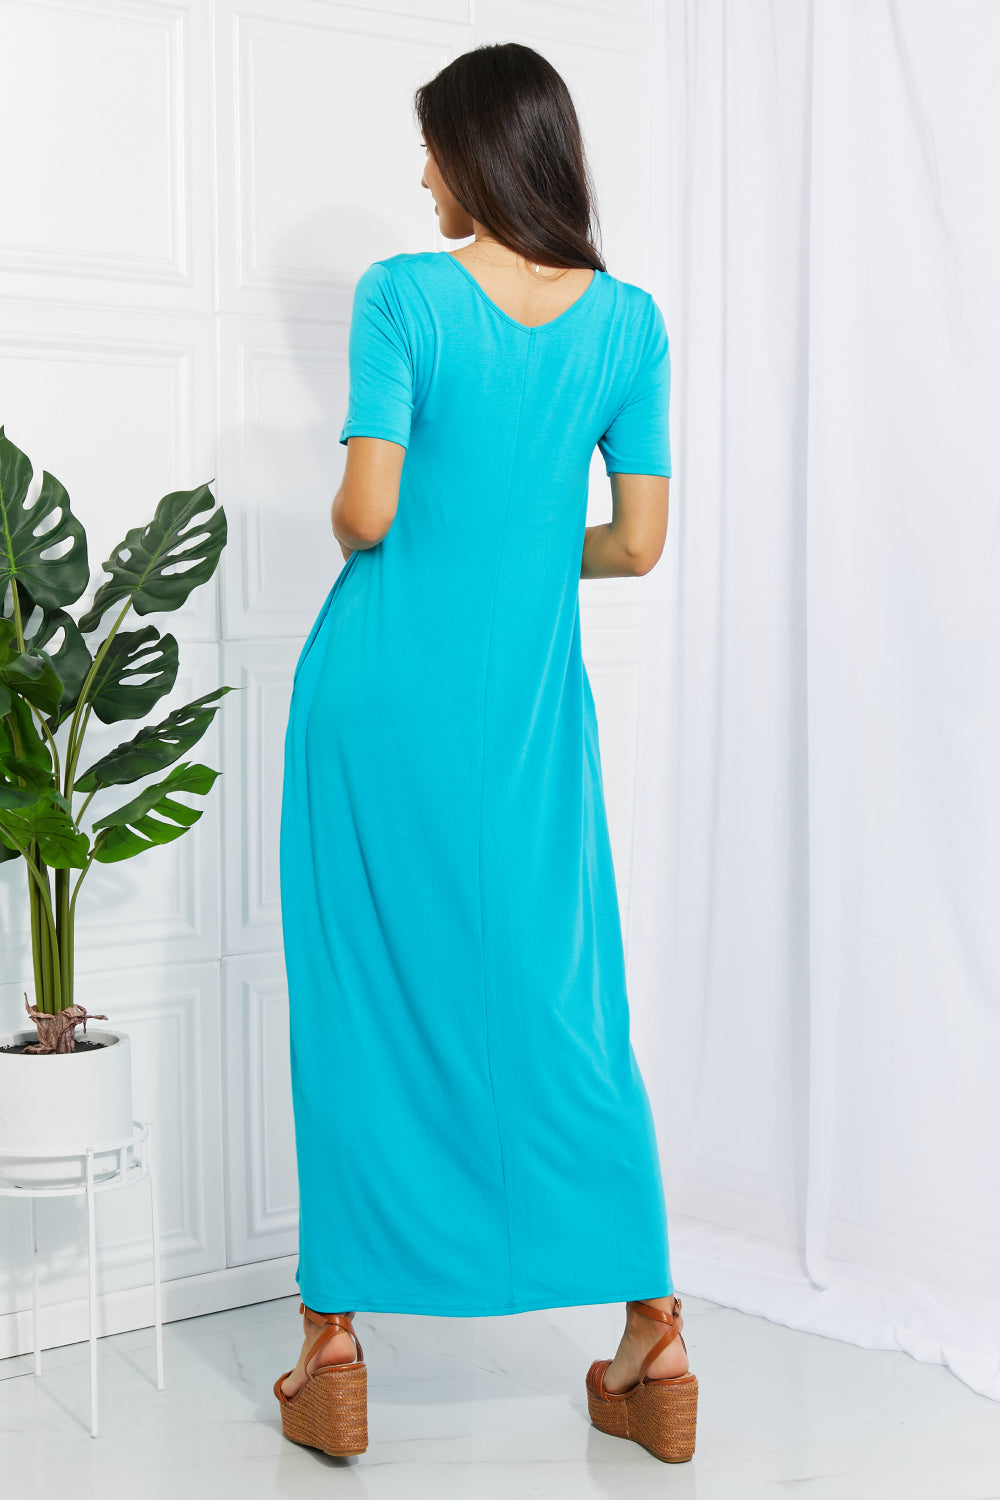 Zenana Simple Wonder Full Size Pocket Maxi Dress in Pastel Blue | Dress - CHANELIA